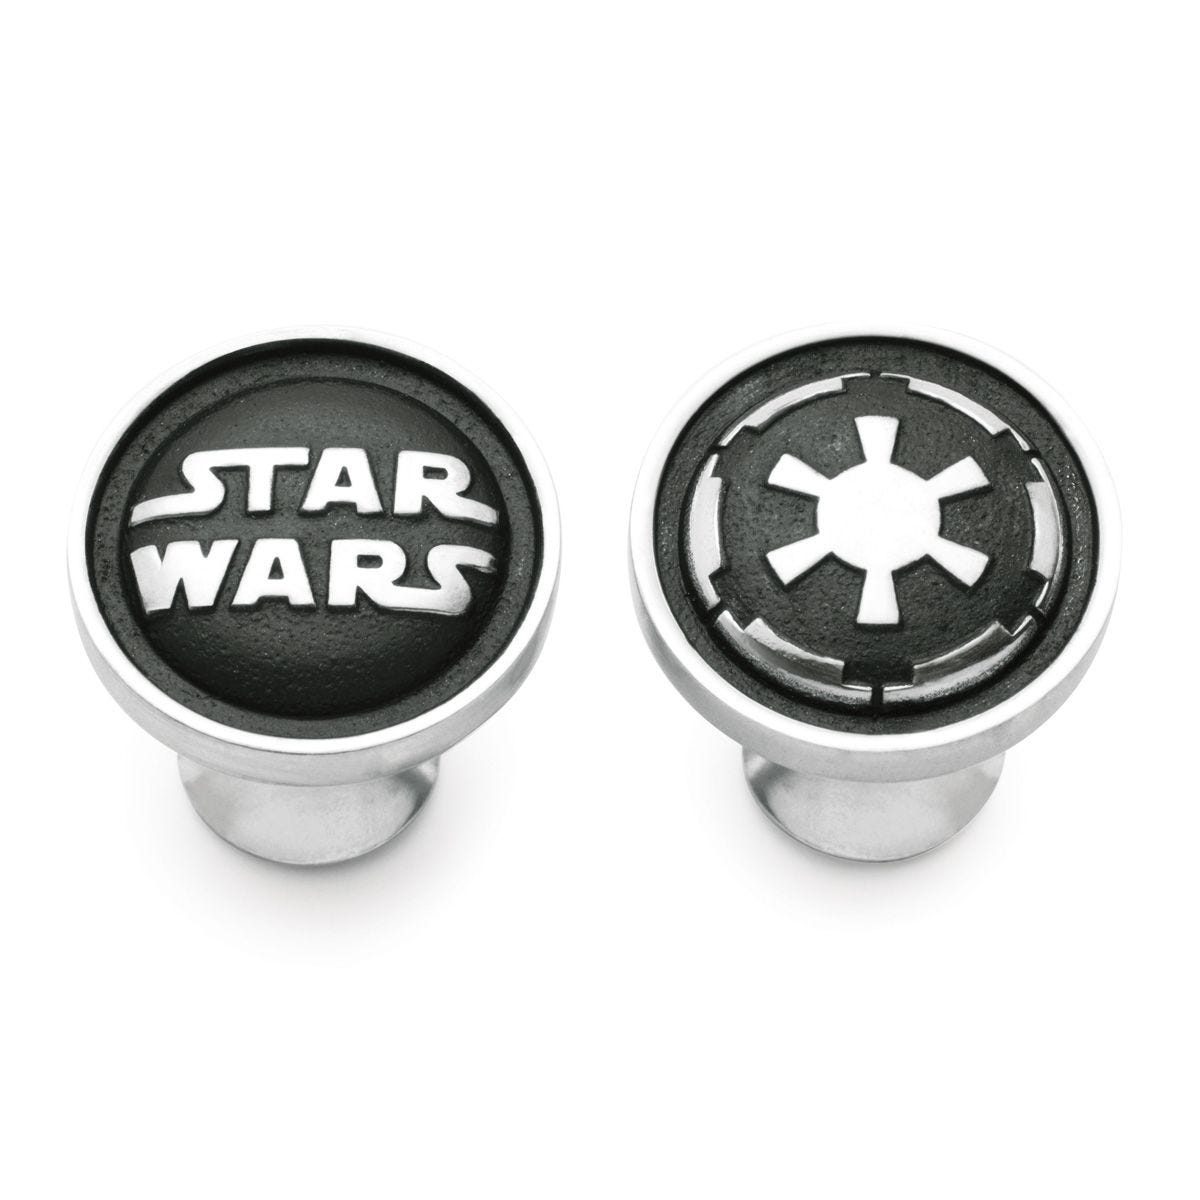 Star Wars Galactic Empire Cufflinks - Pewter - Notbrand